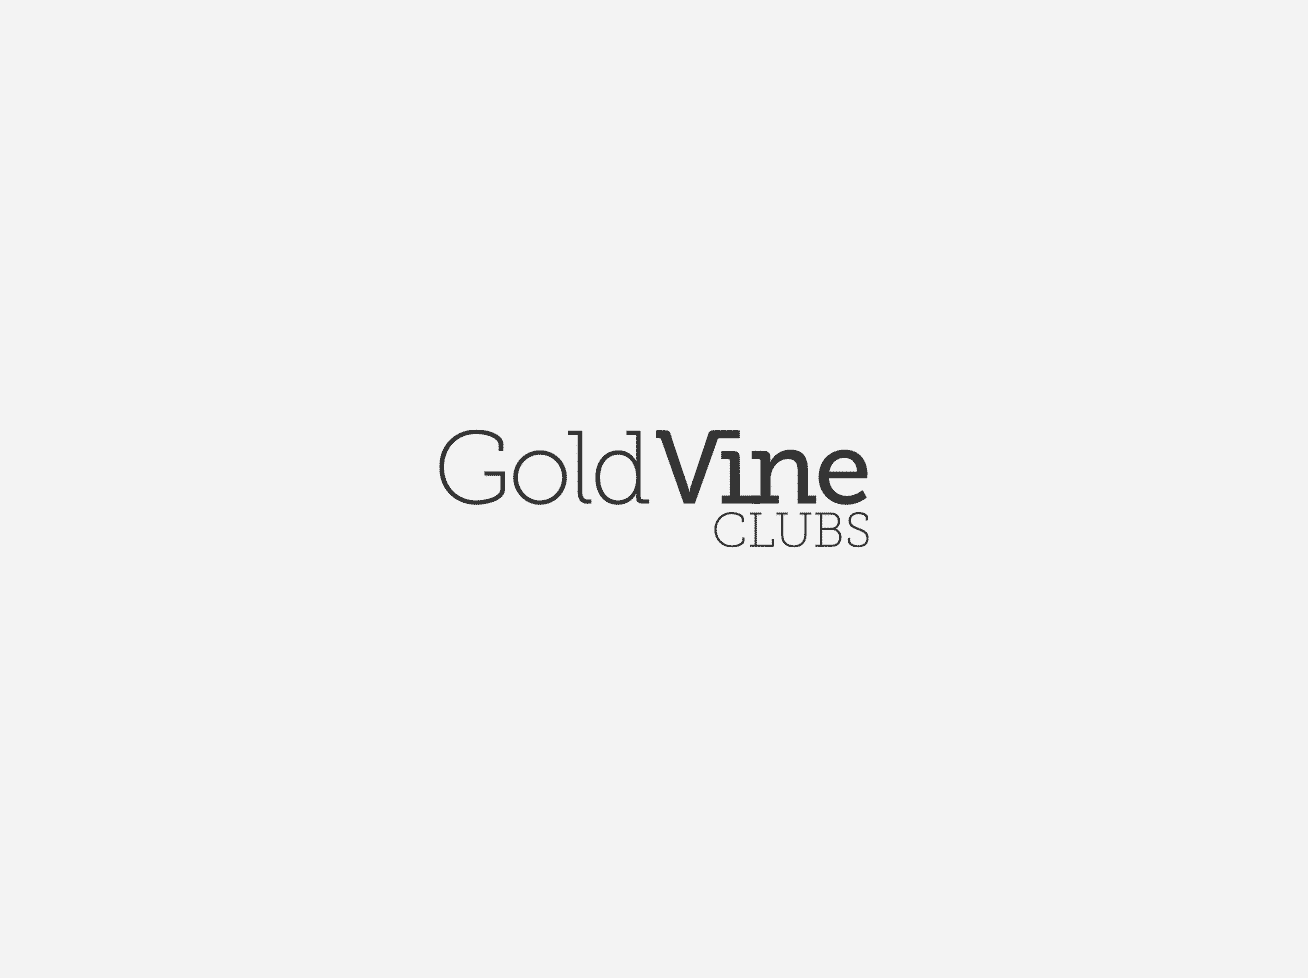 goldvine